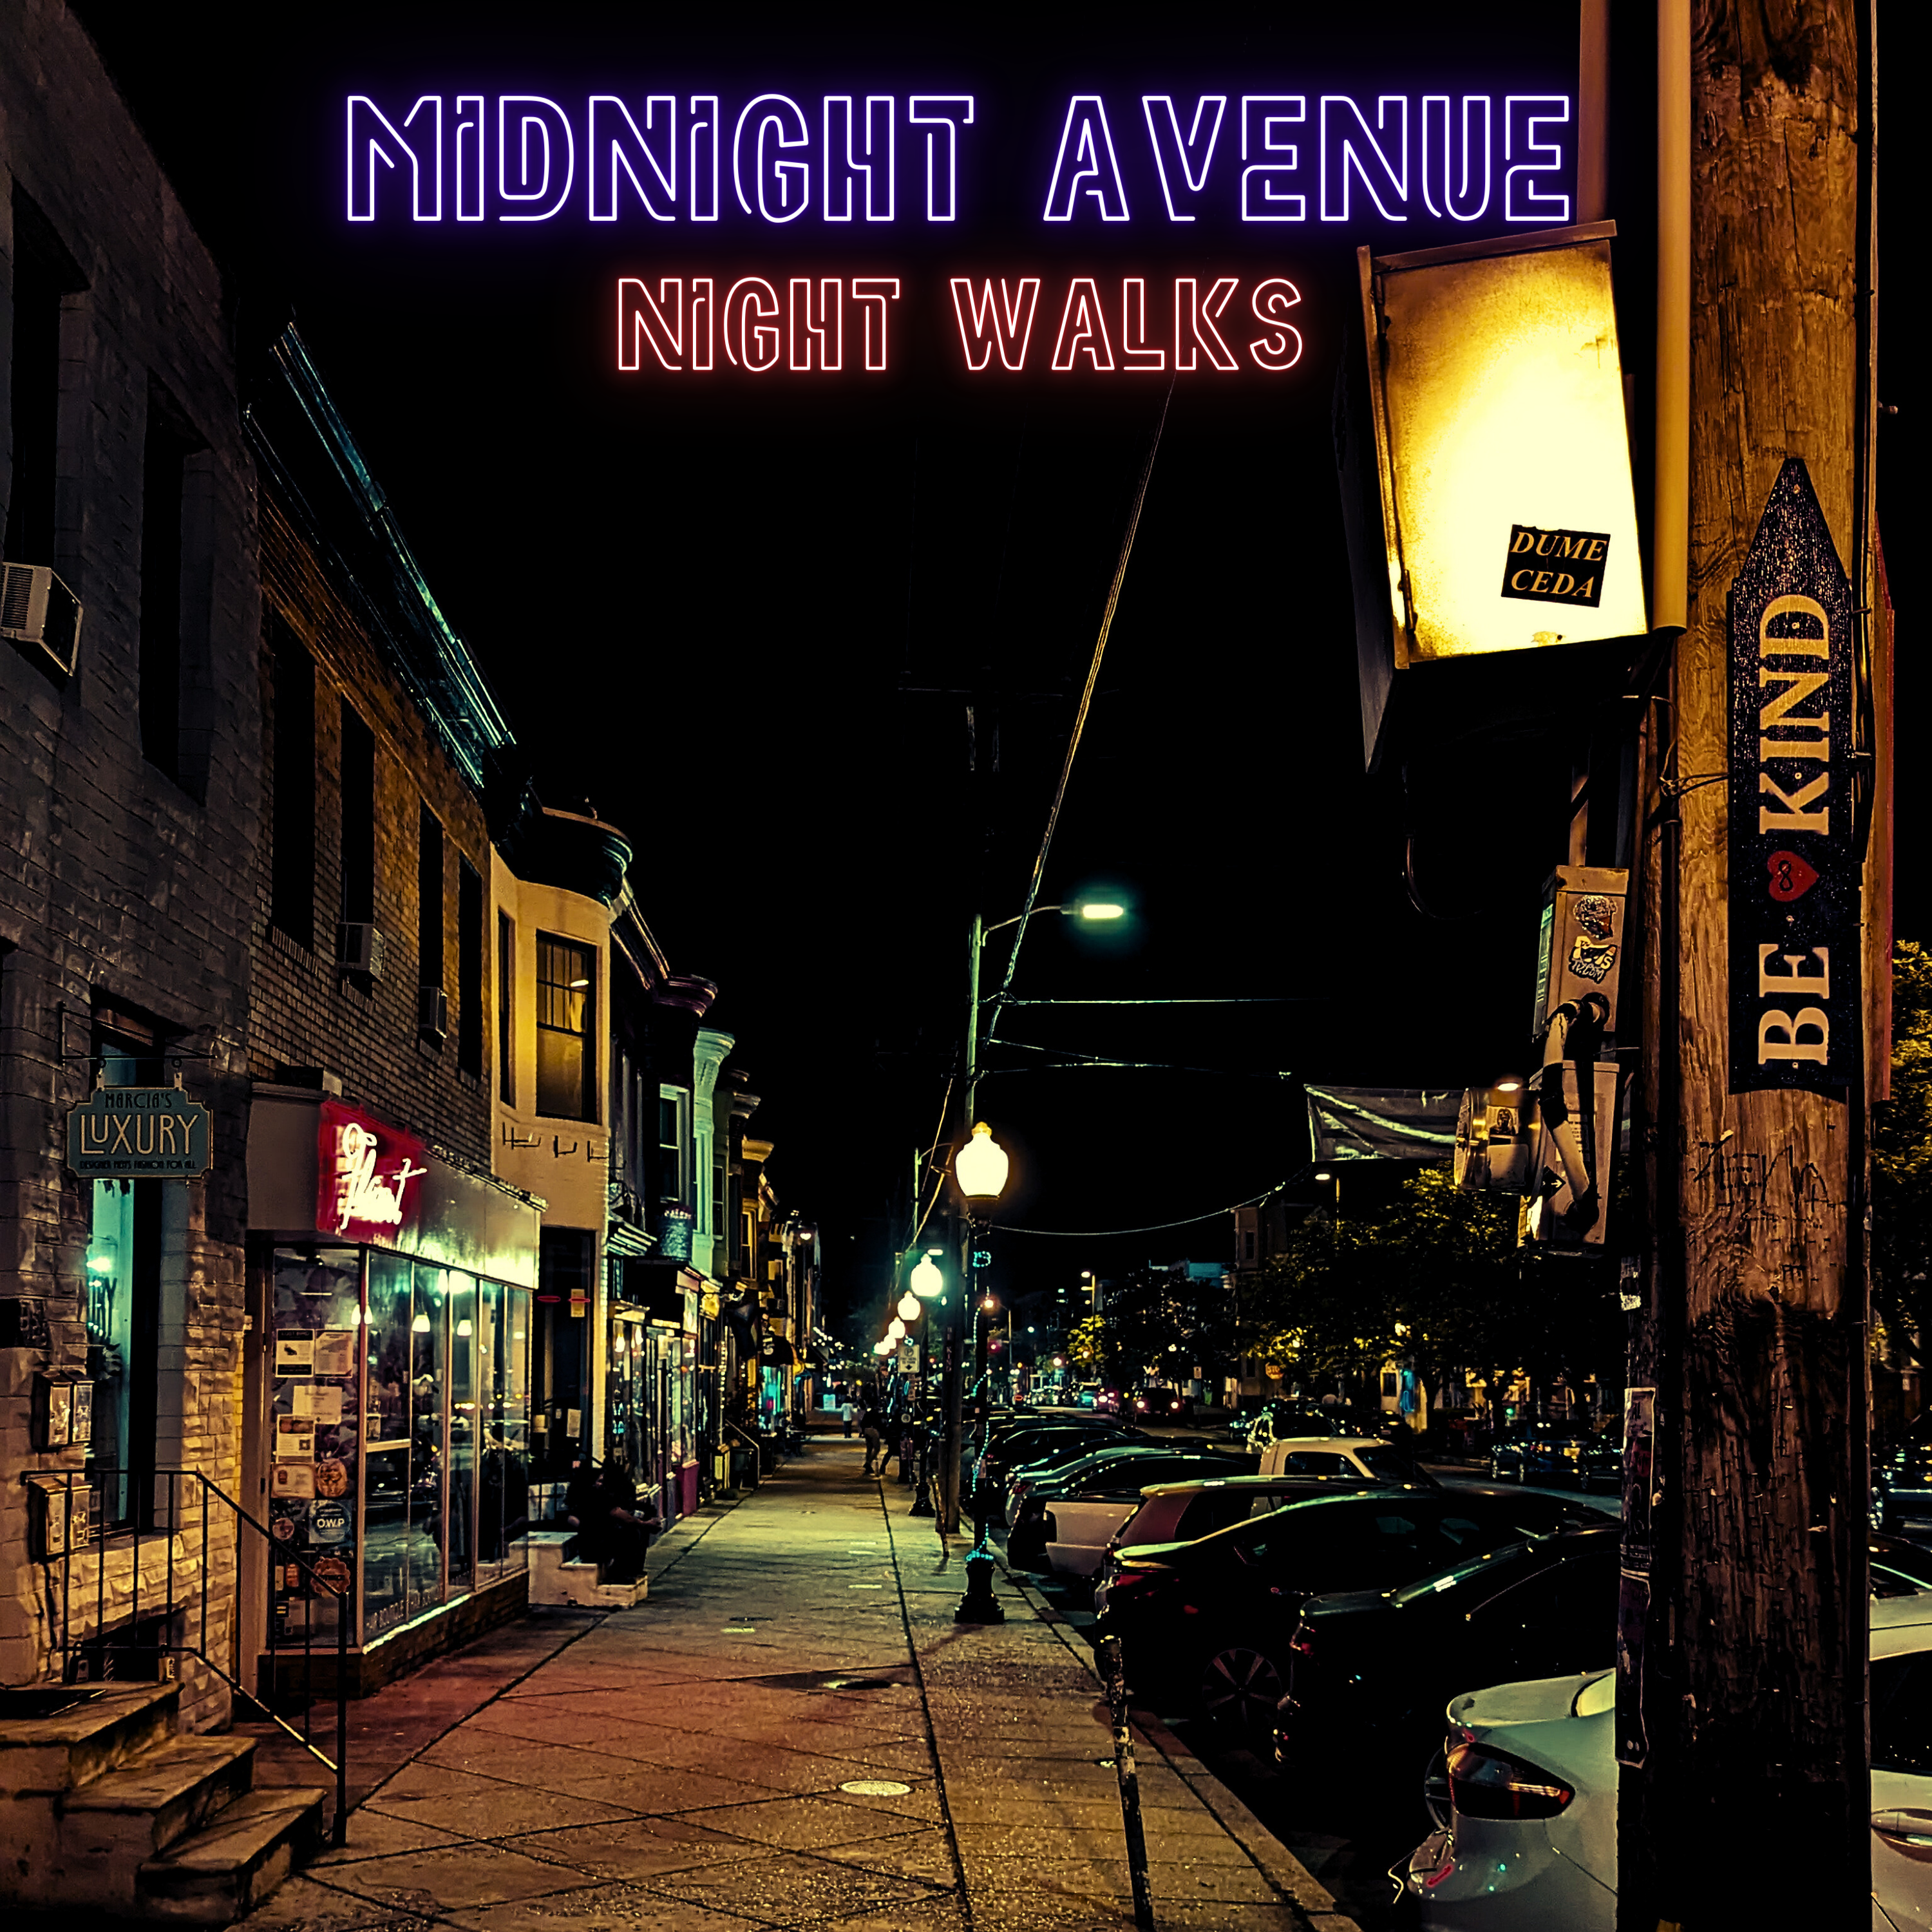 "Midnight Avenue" by Night Walks